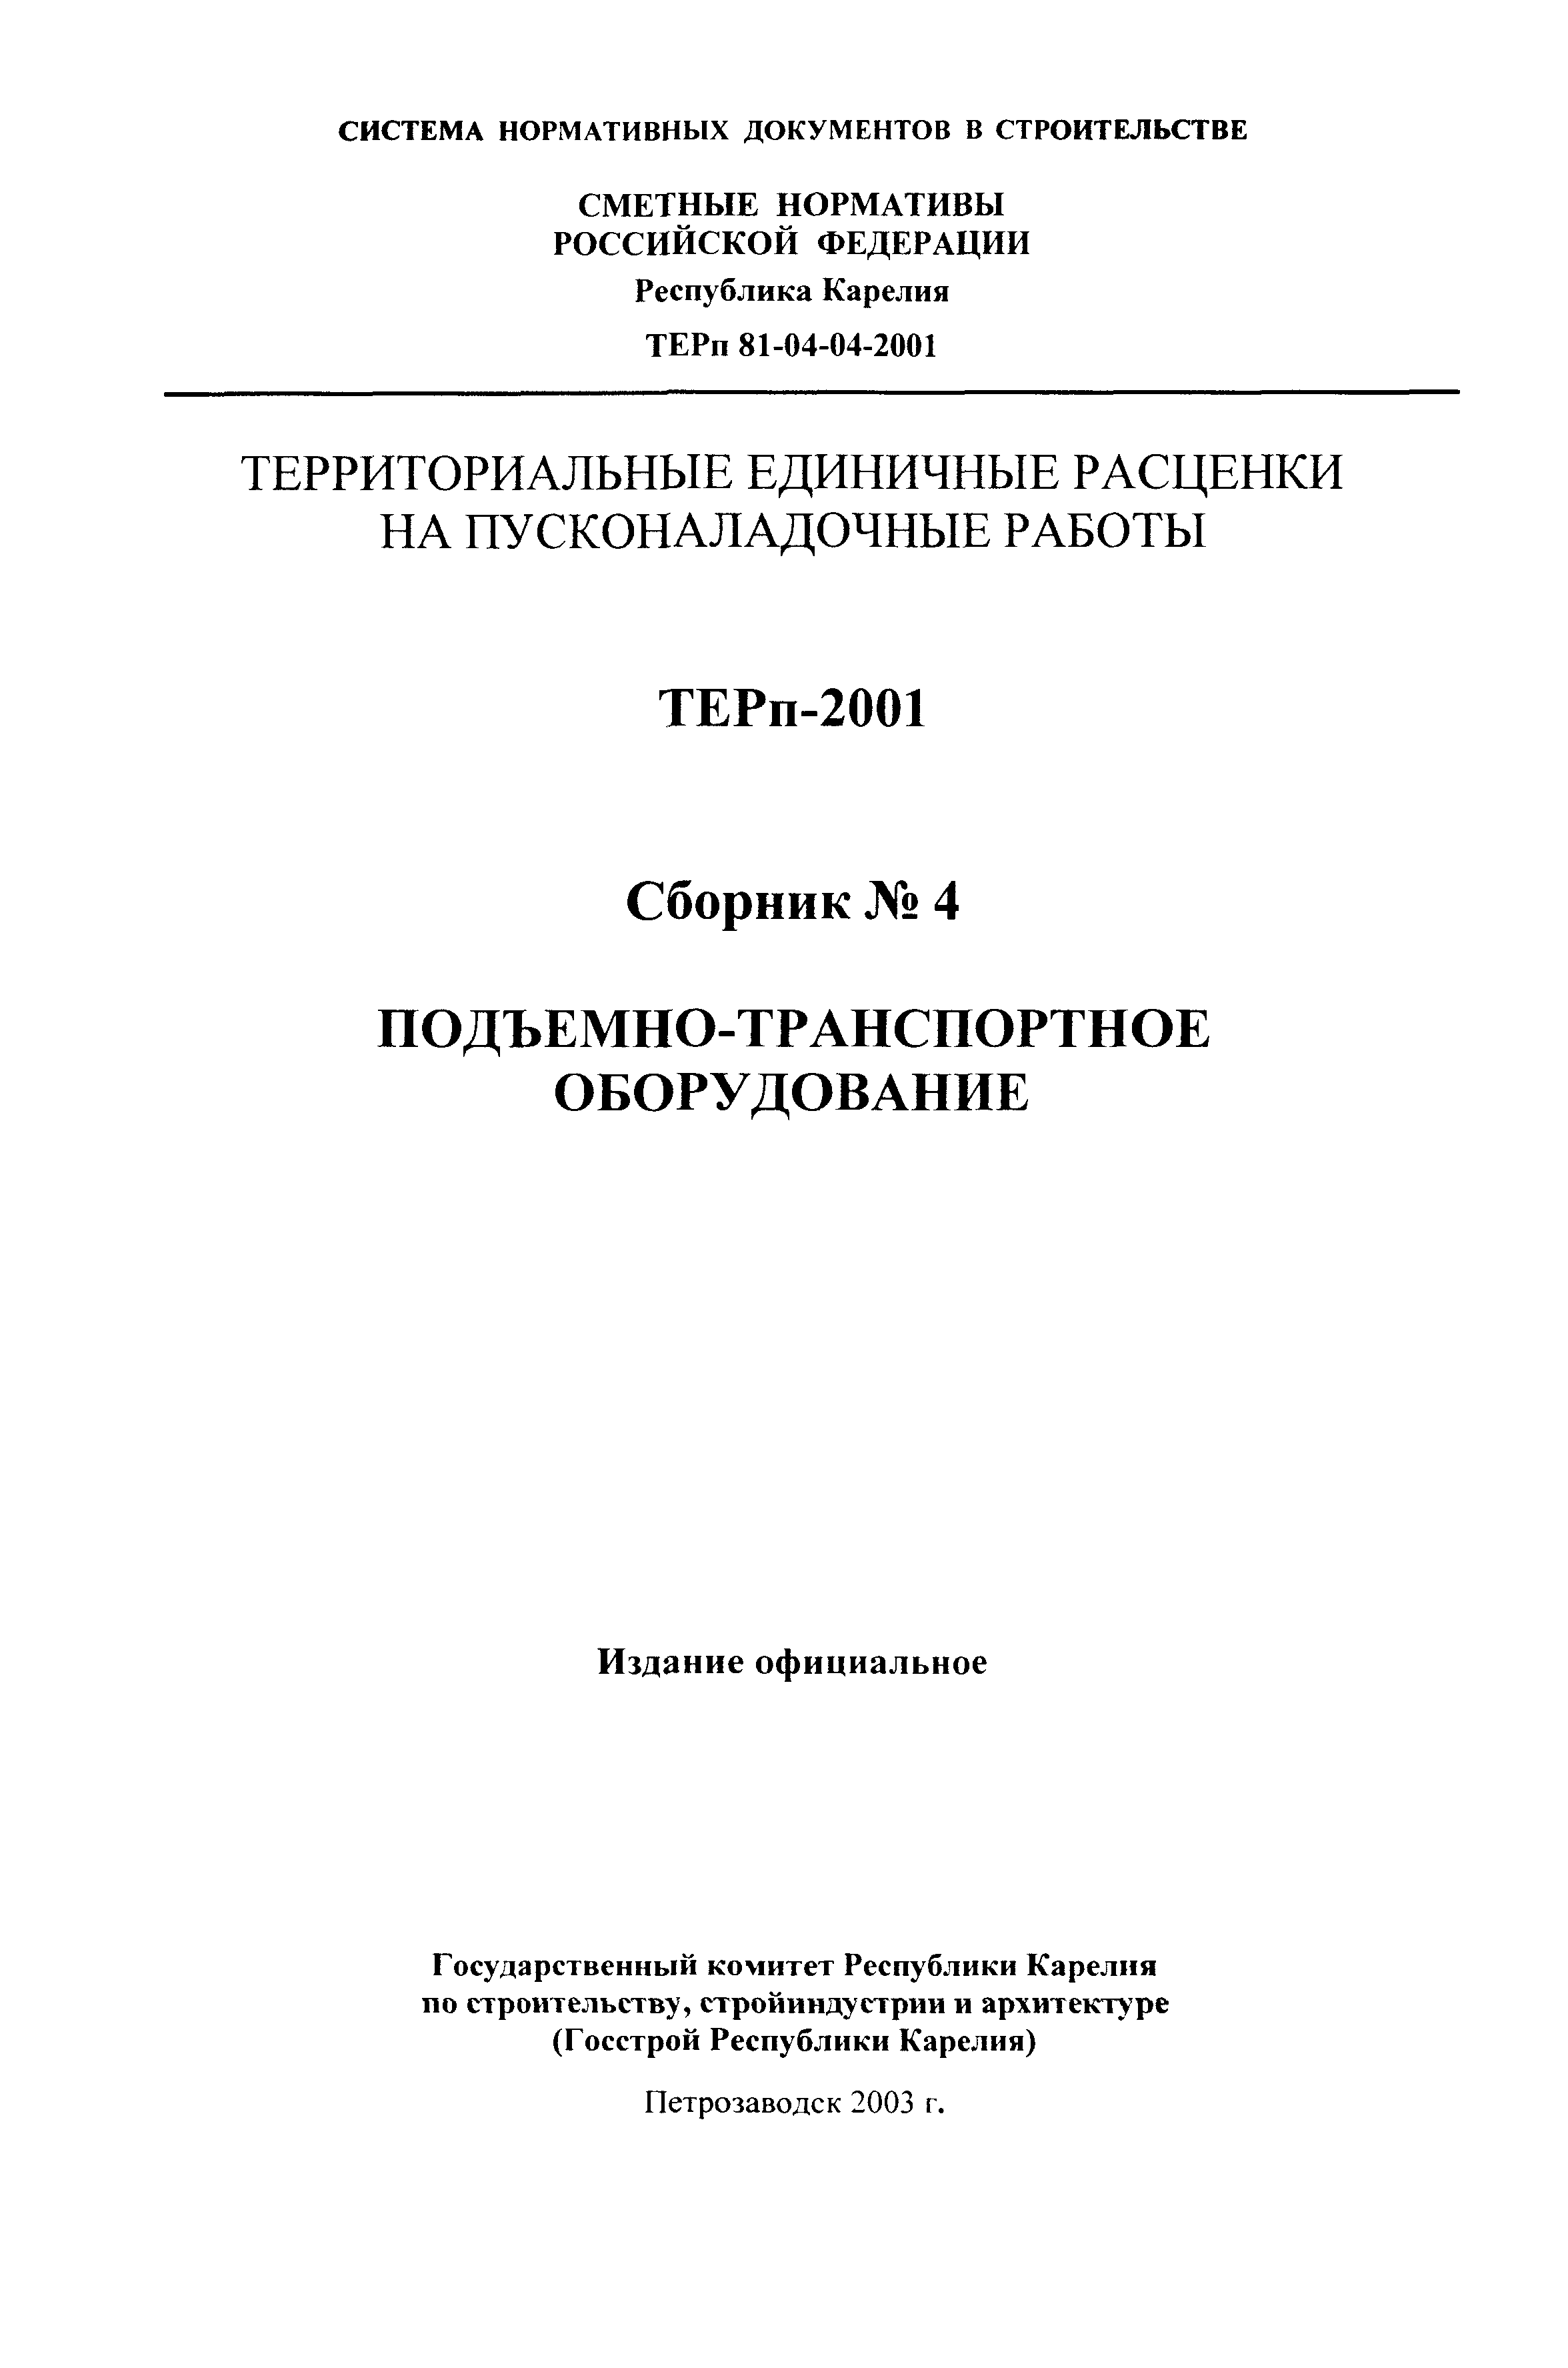 ТЕРп Республика Карелия 2001-04